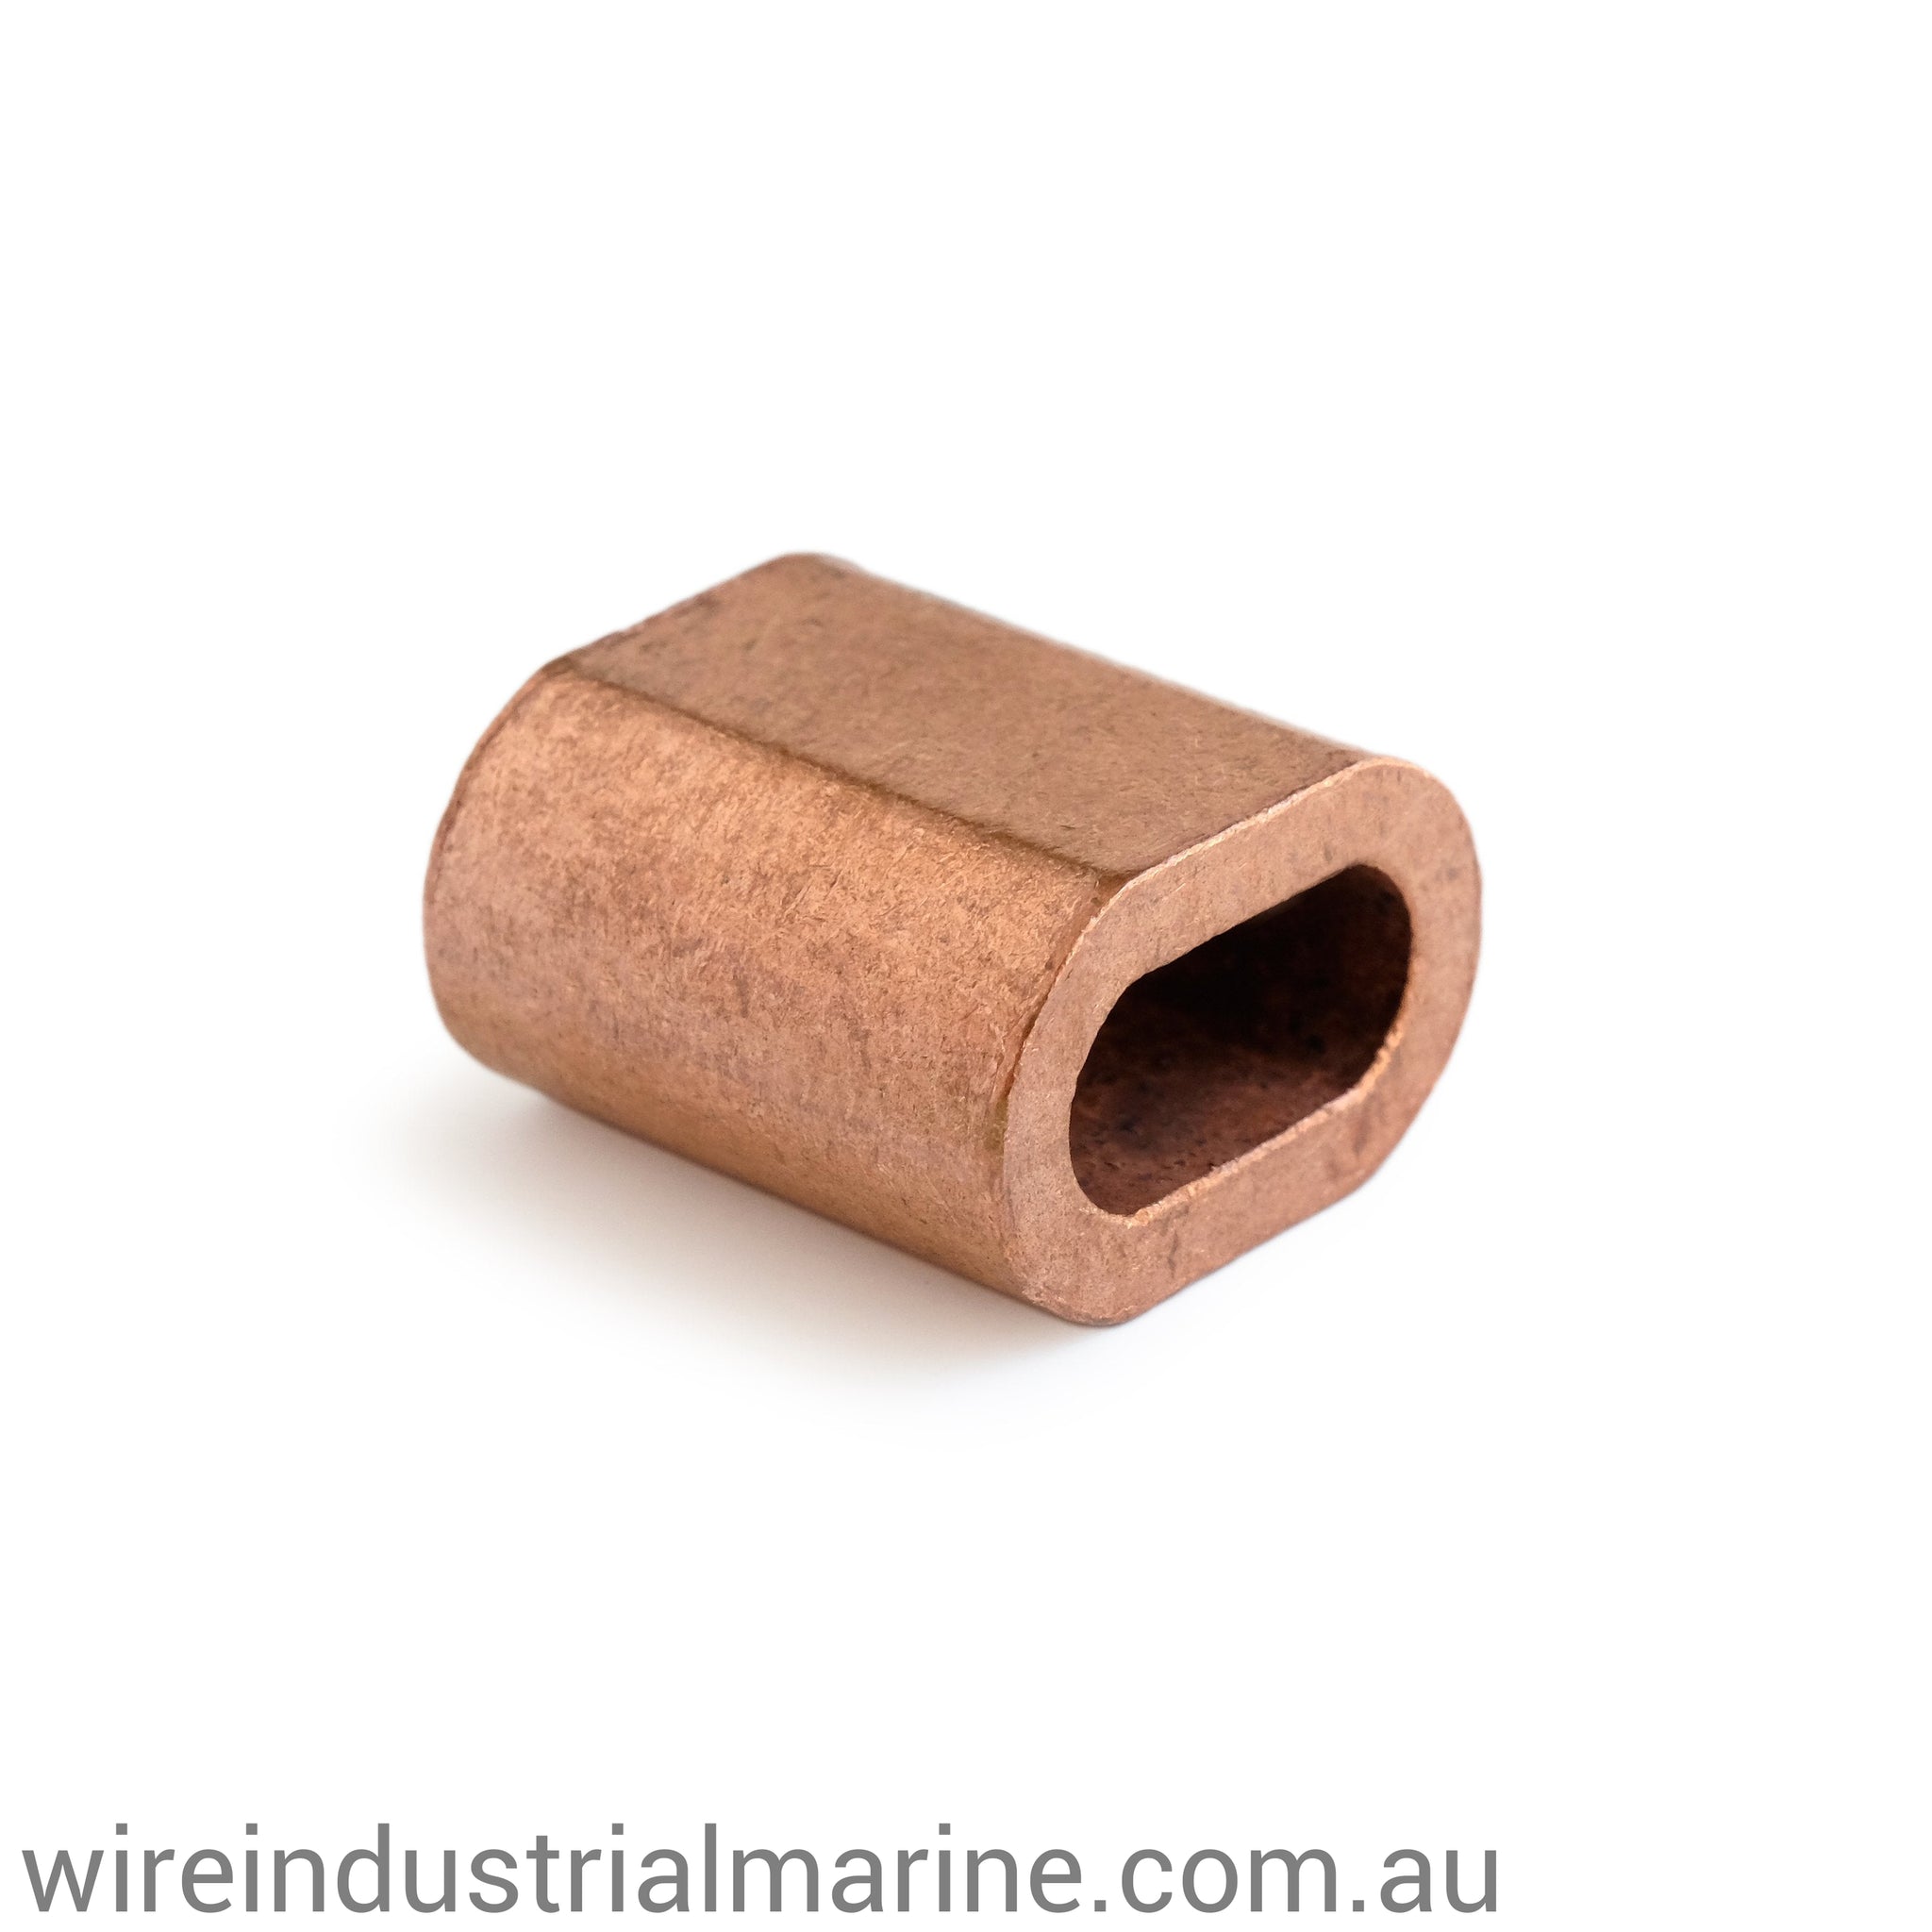 5mm - Copper - DIN Code machine press ferrule for stainless steel wire-wireindustrialmarine